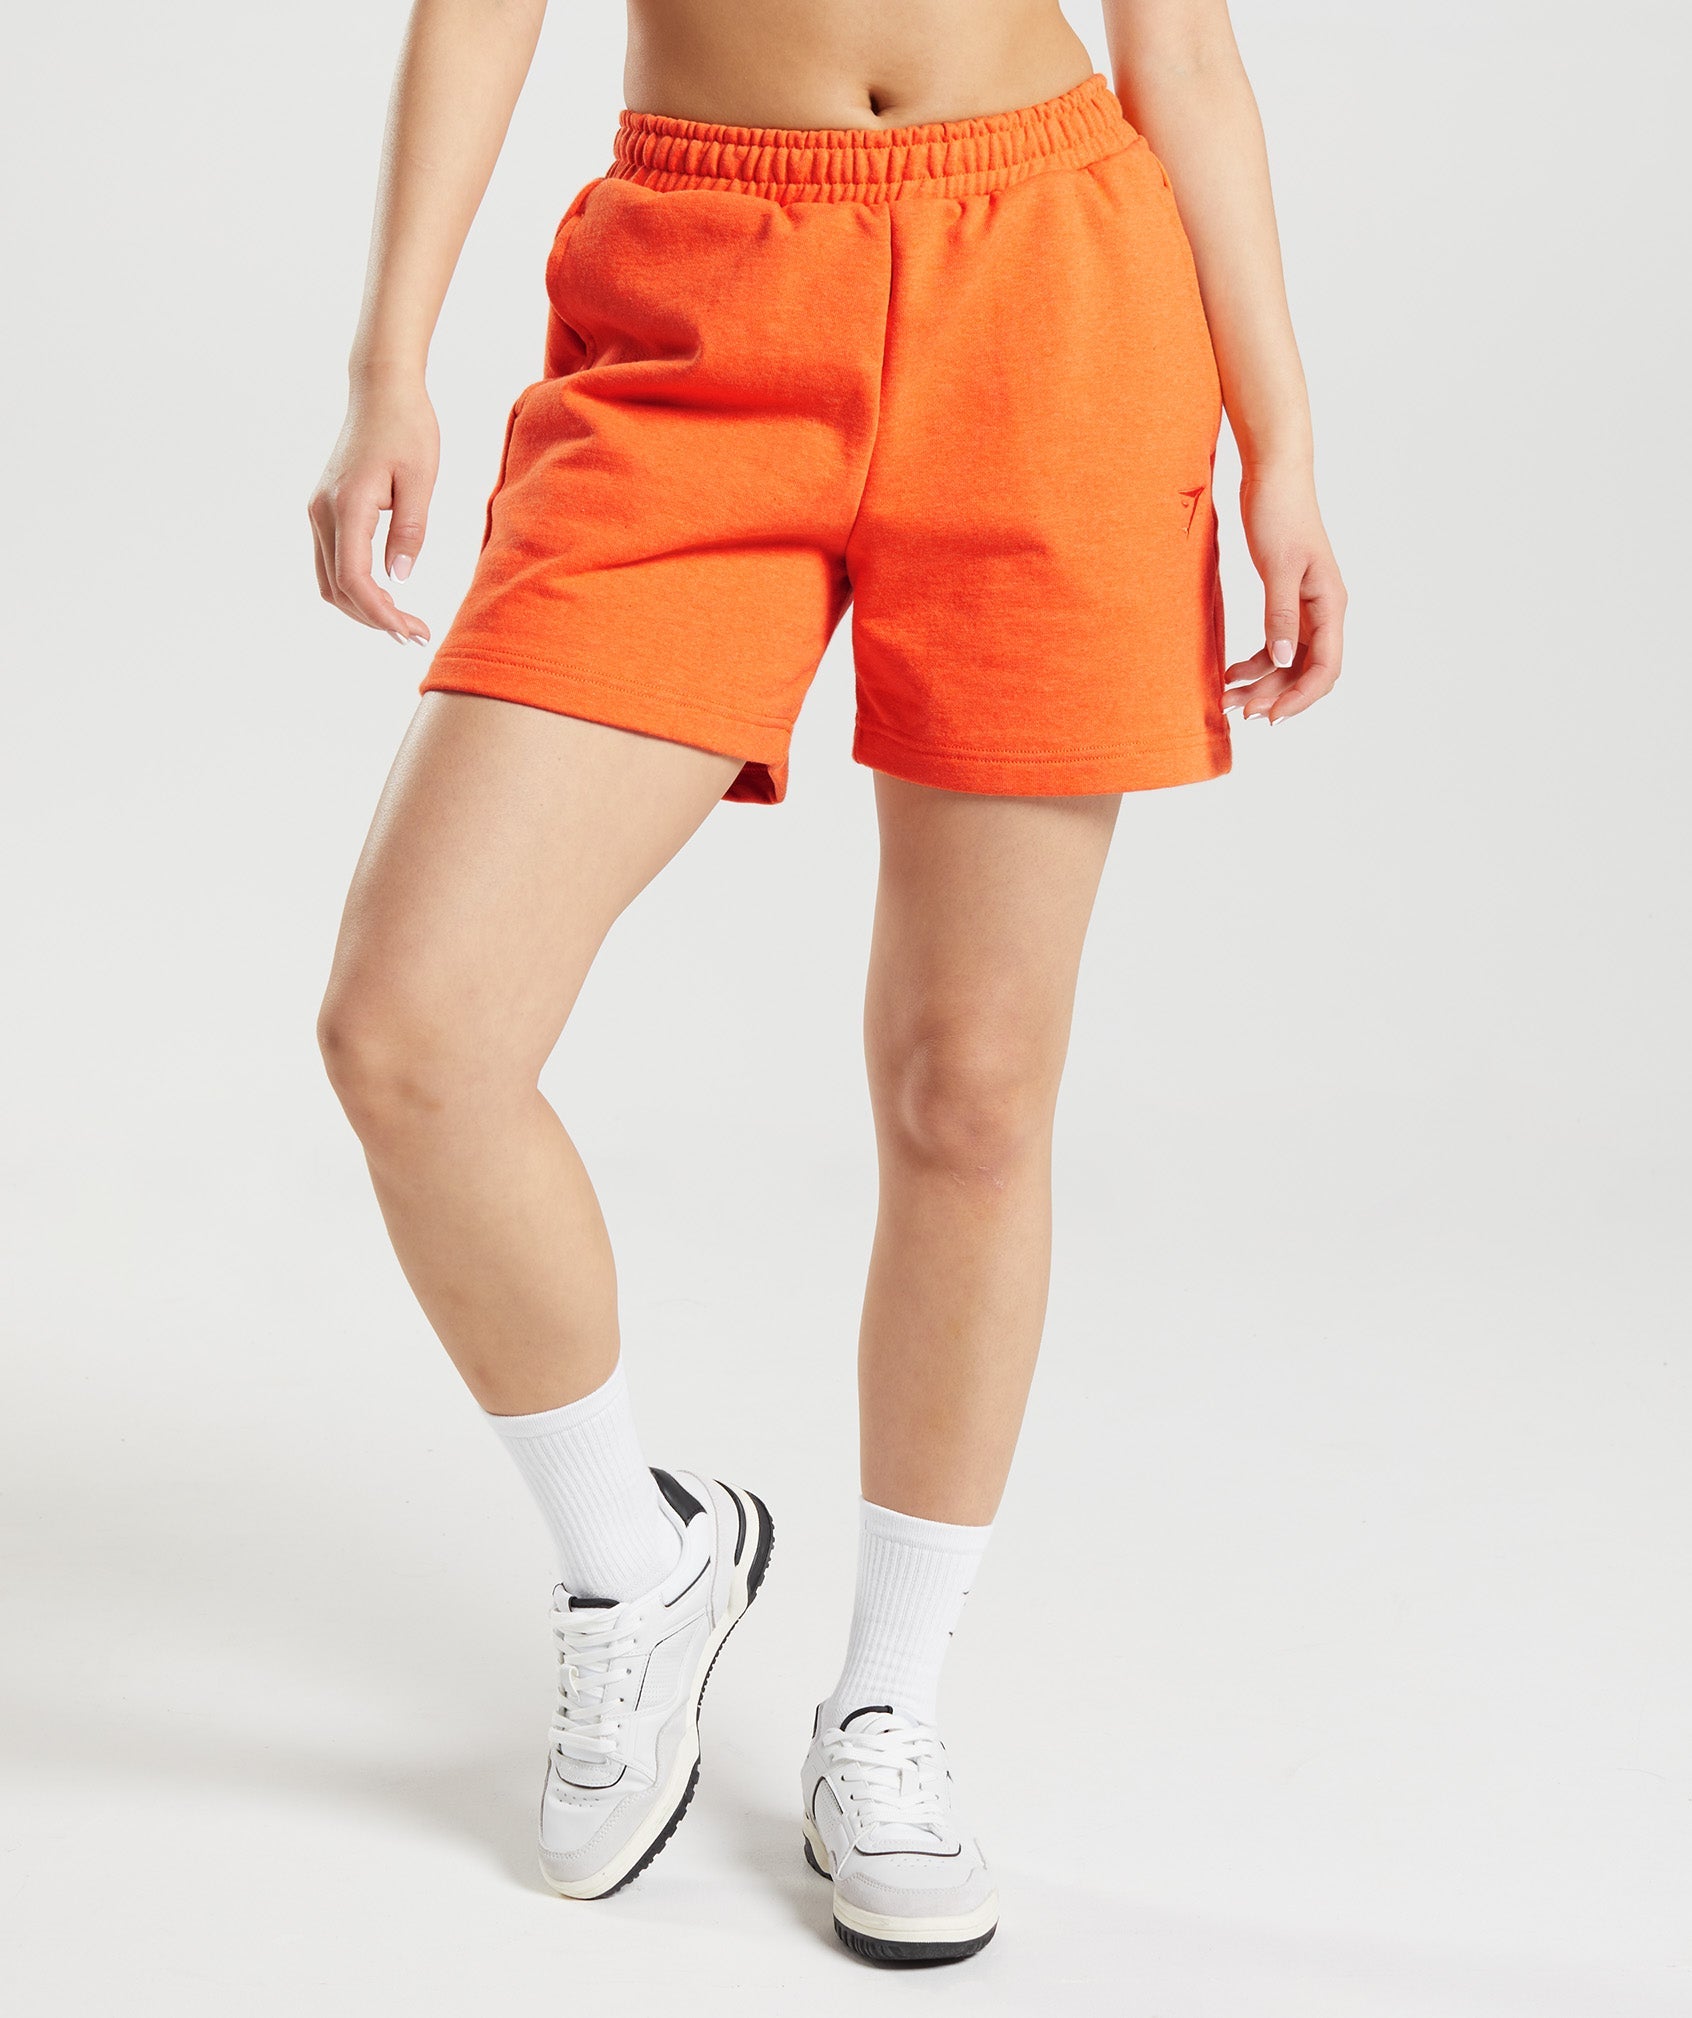 Rest Day Sweats Shorts in Blaze Orange Marl